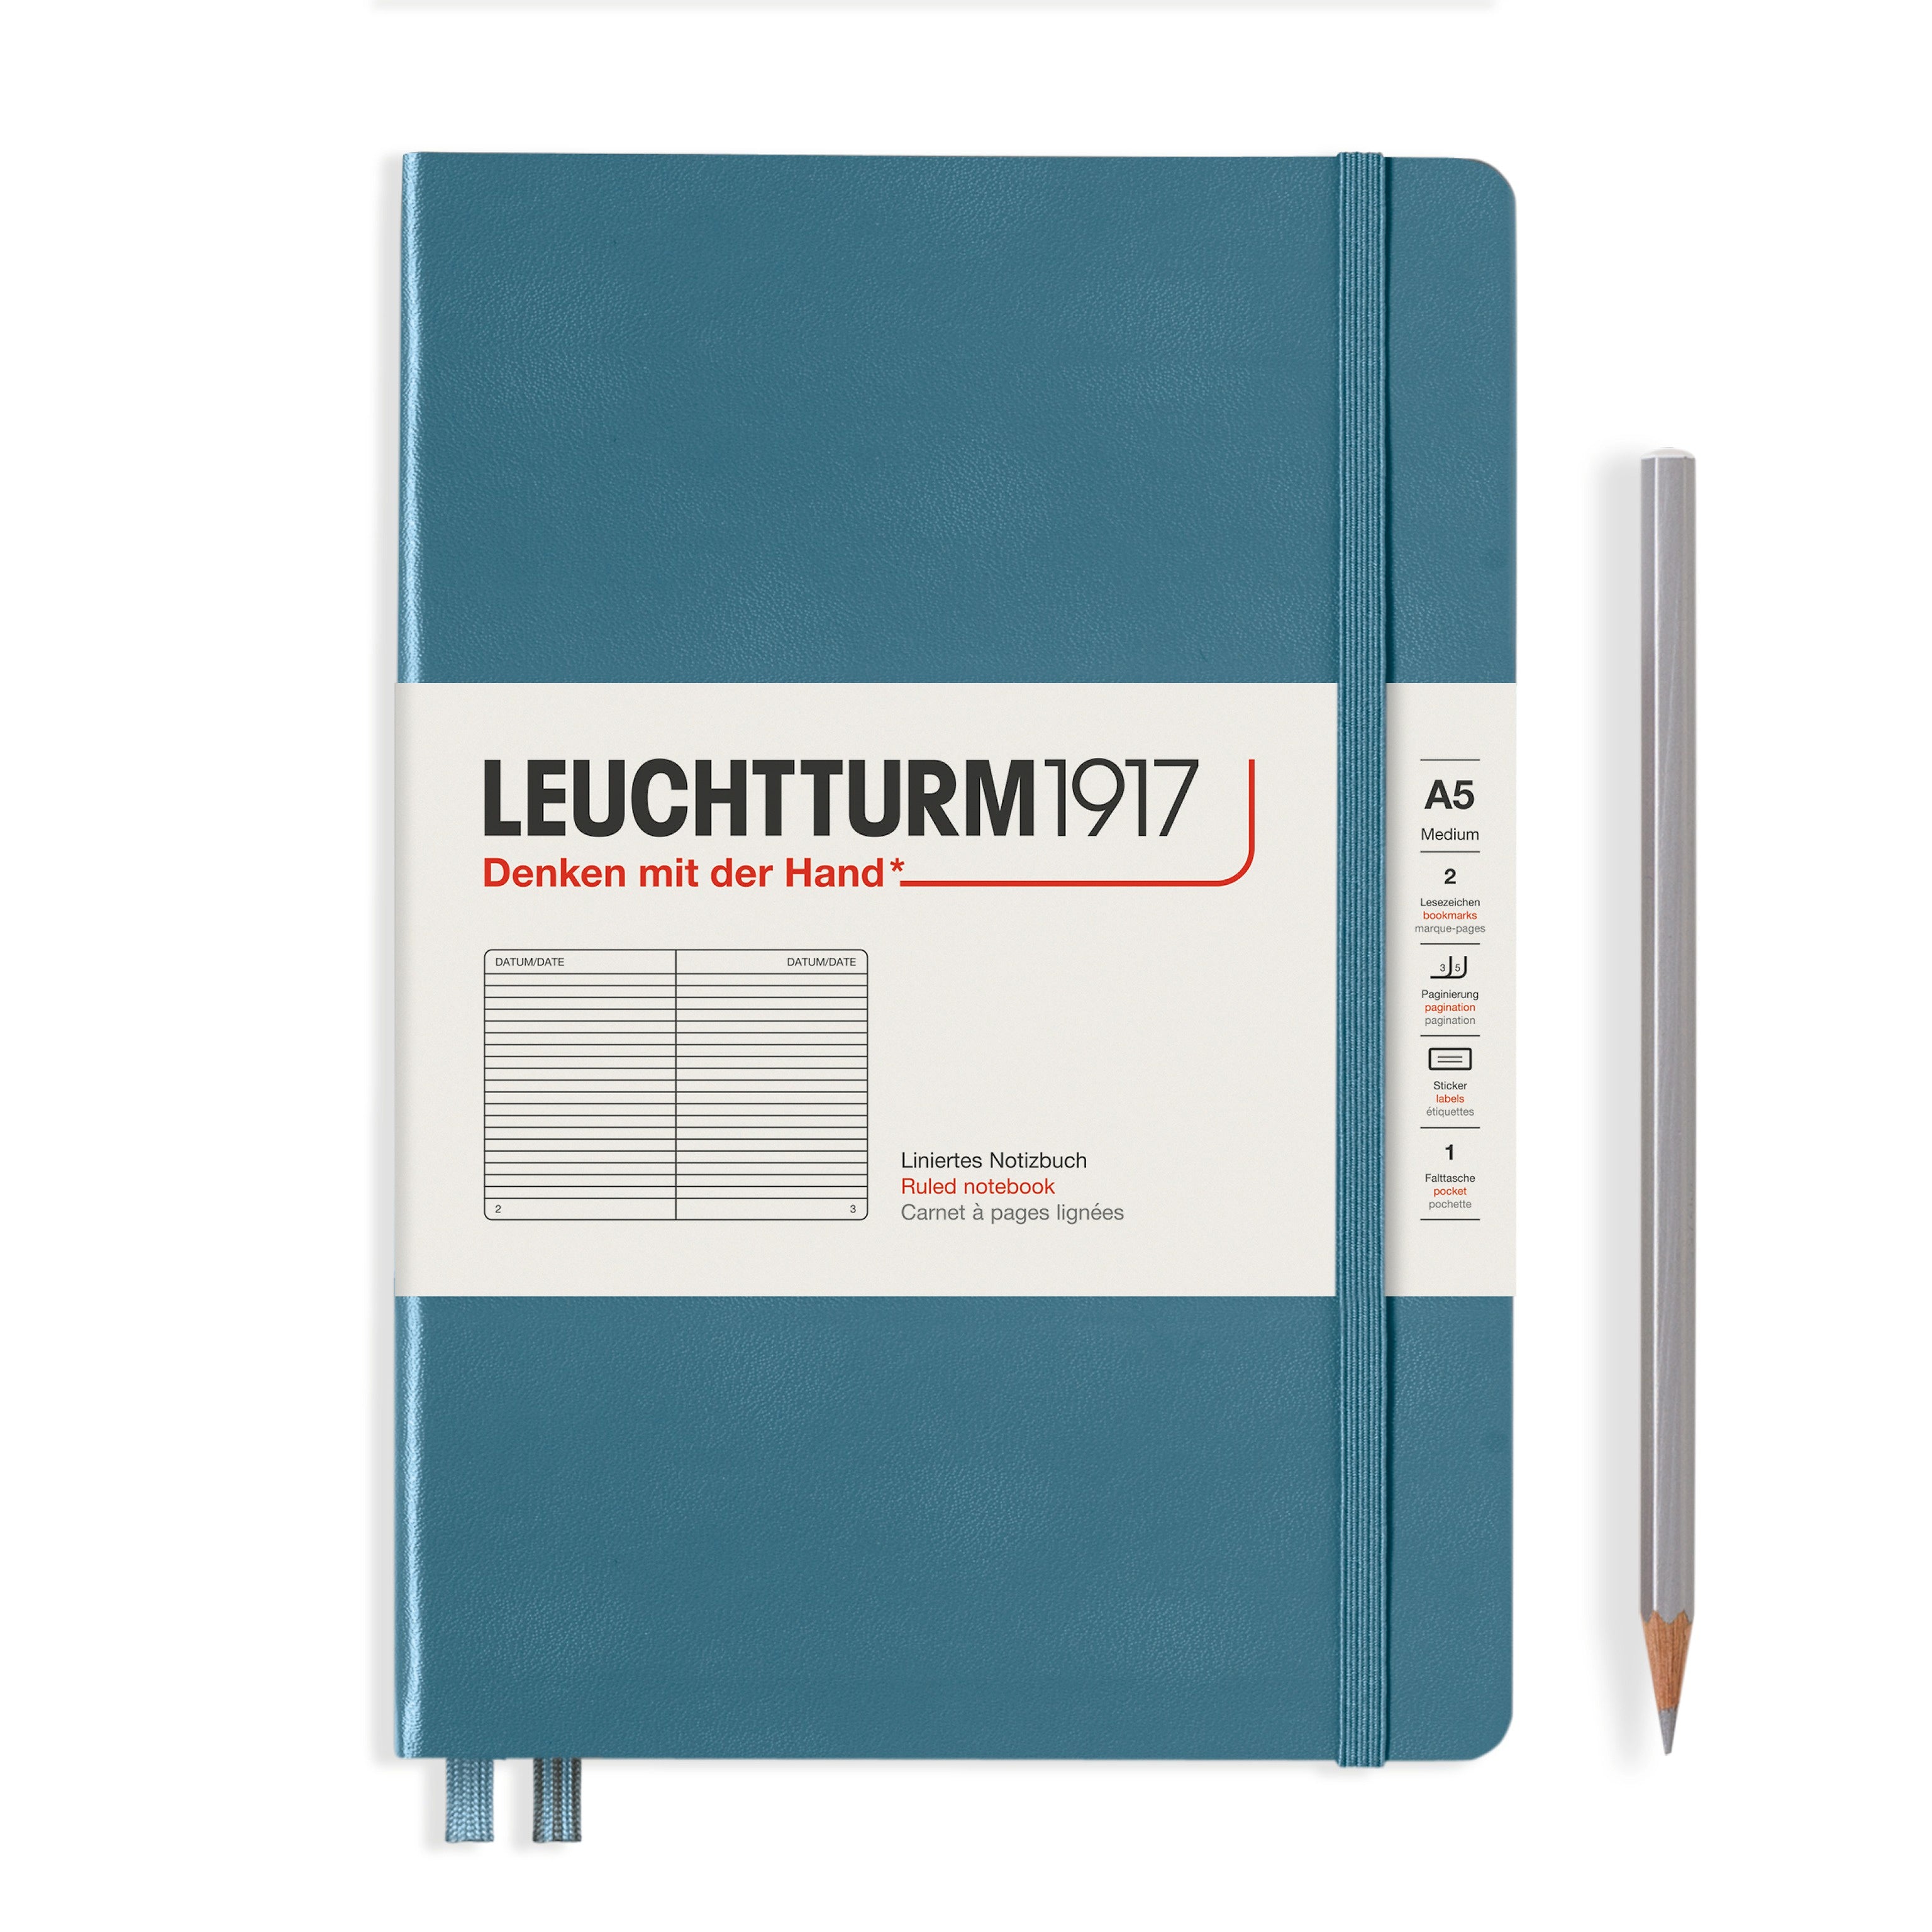 Leuchtturm1917 Notebook Medium (A5) Ruled Stone Blue - Pencraft the boutique